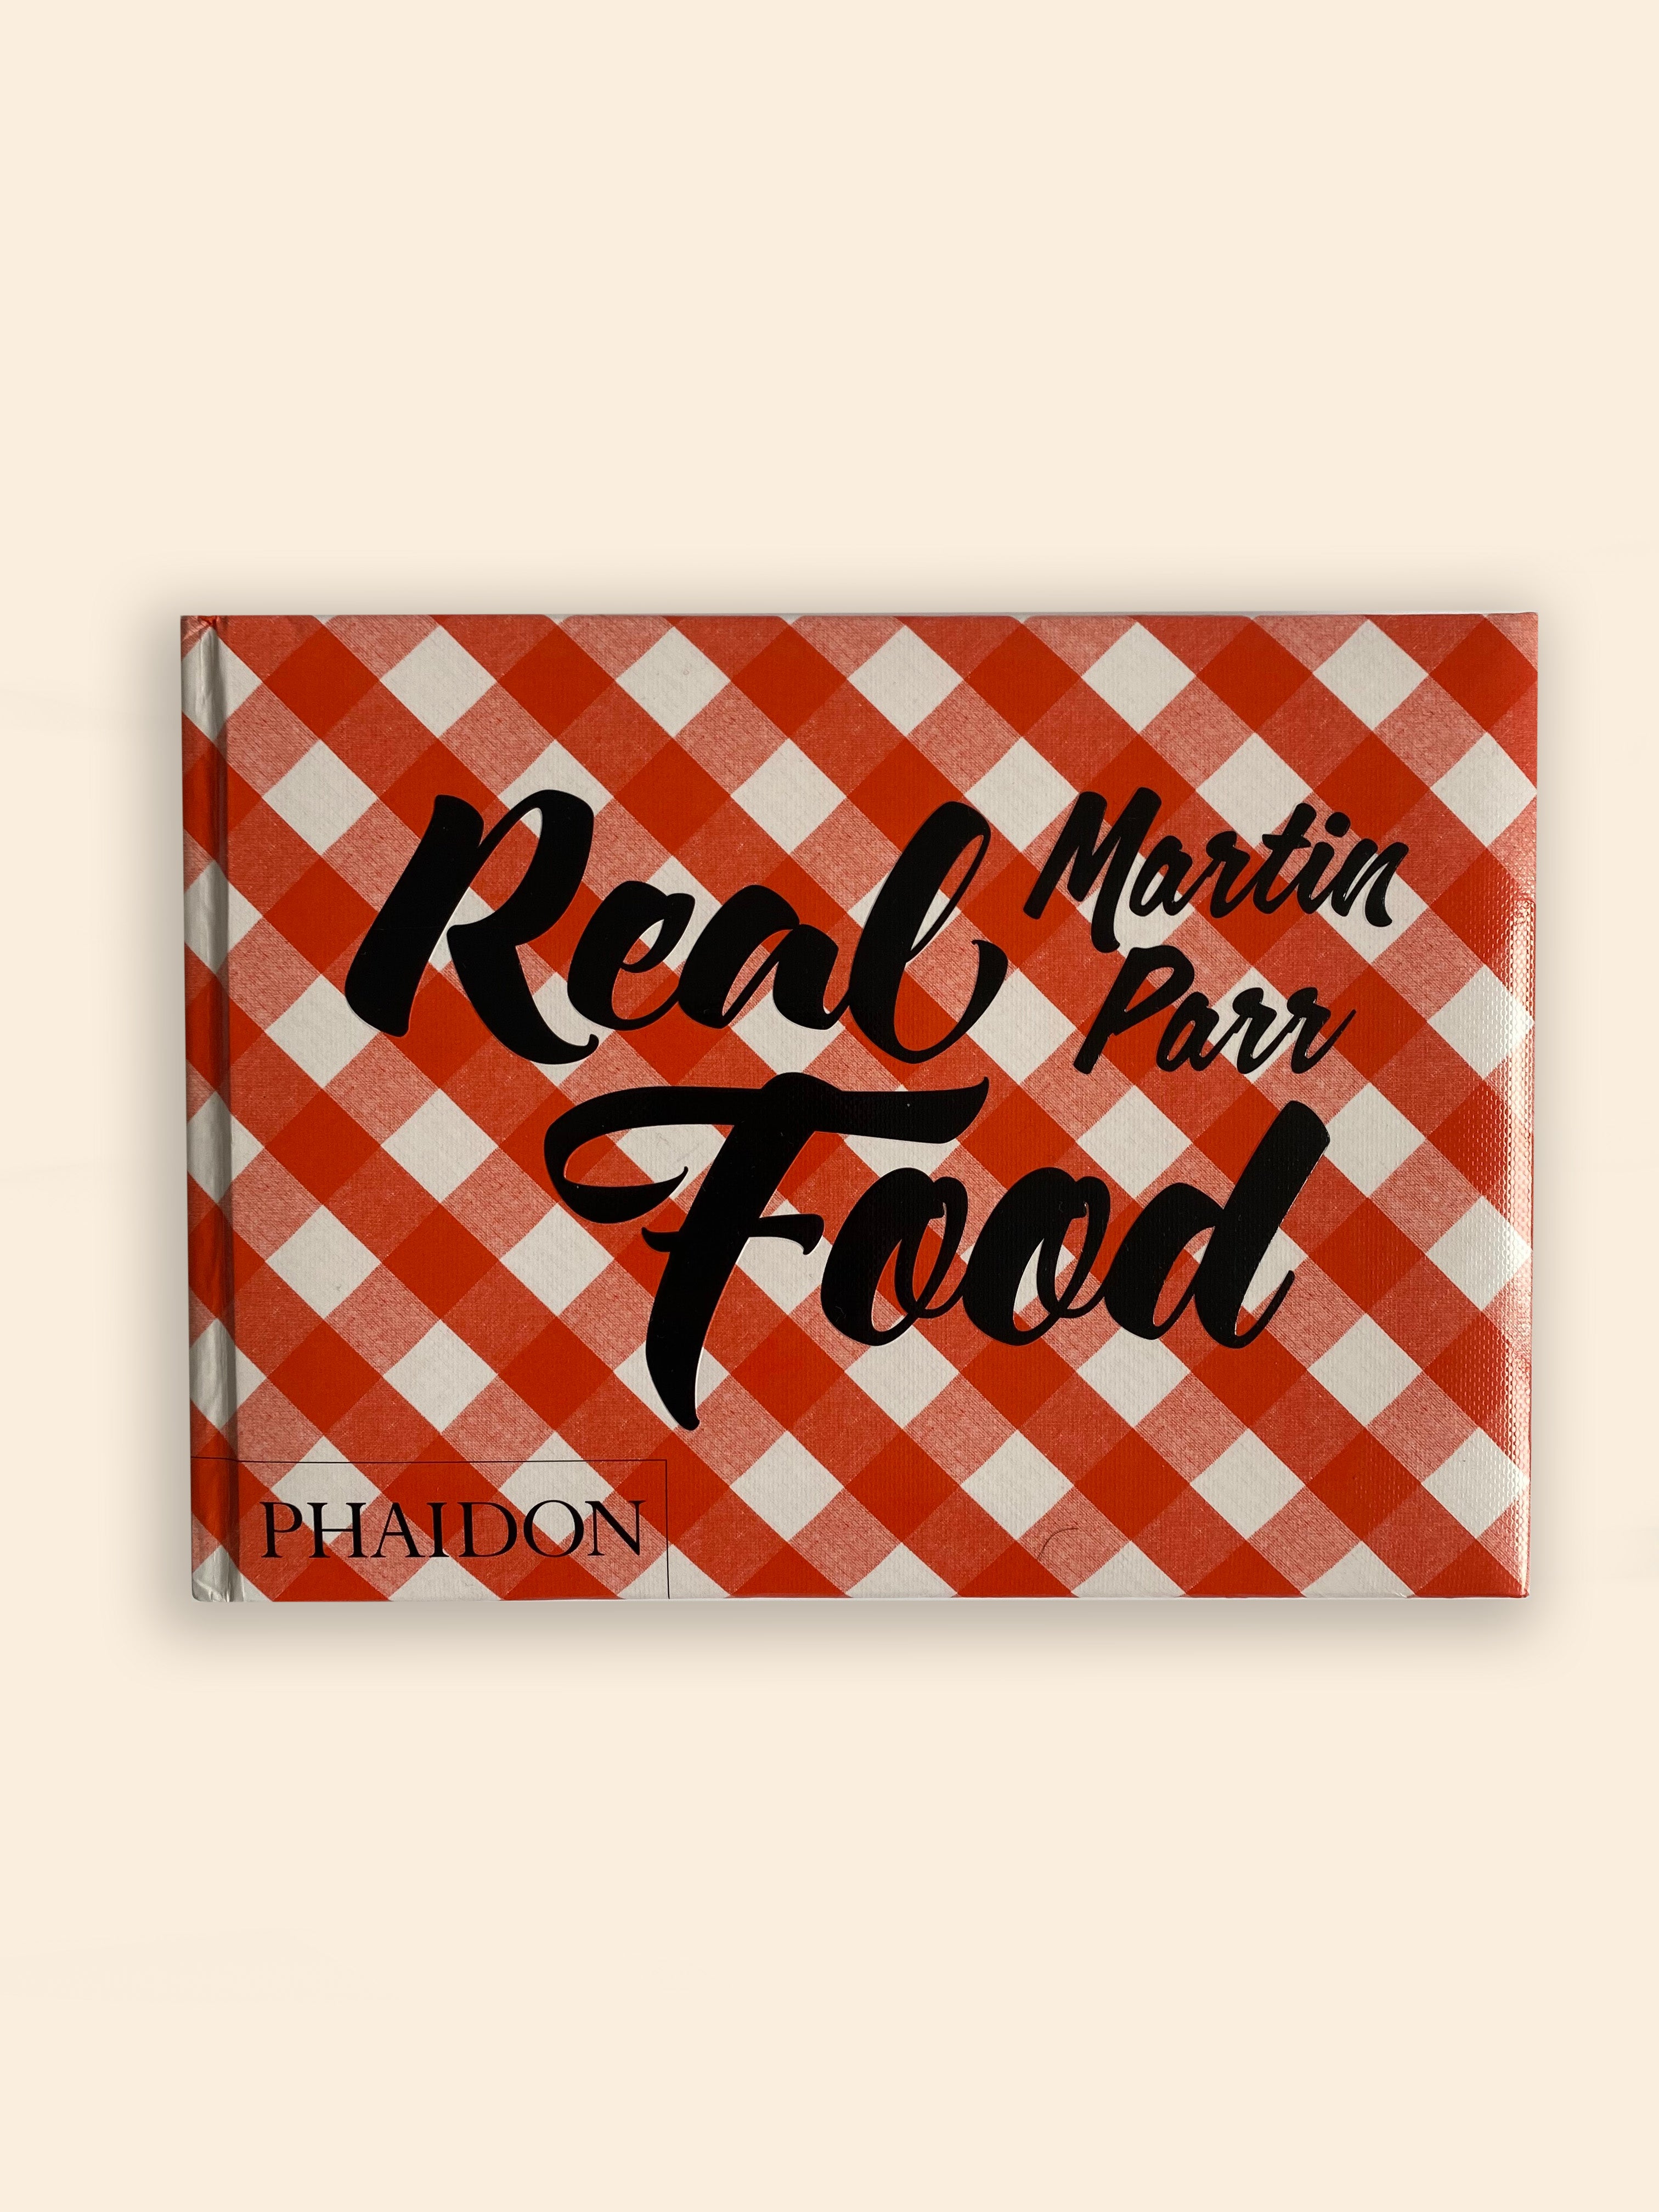 Martin Parr | Real Food